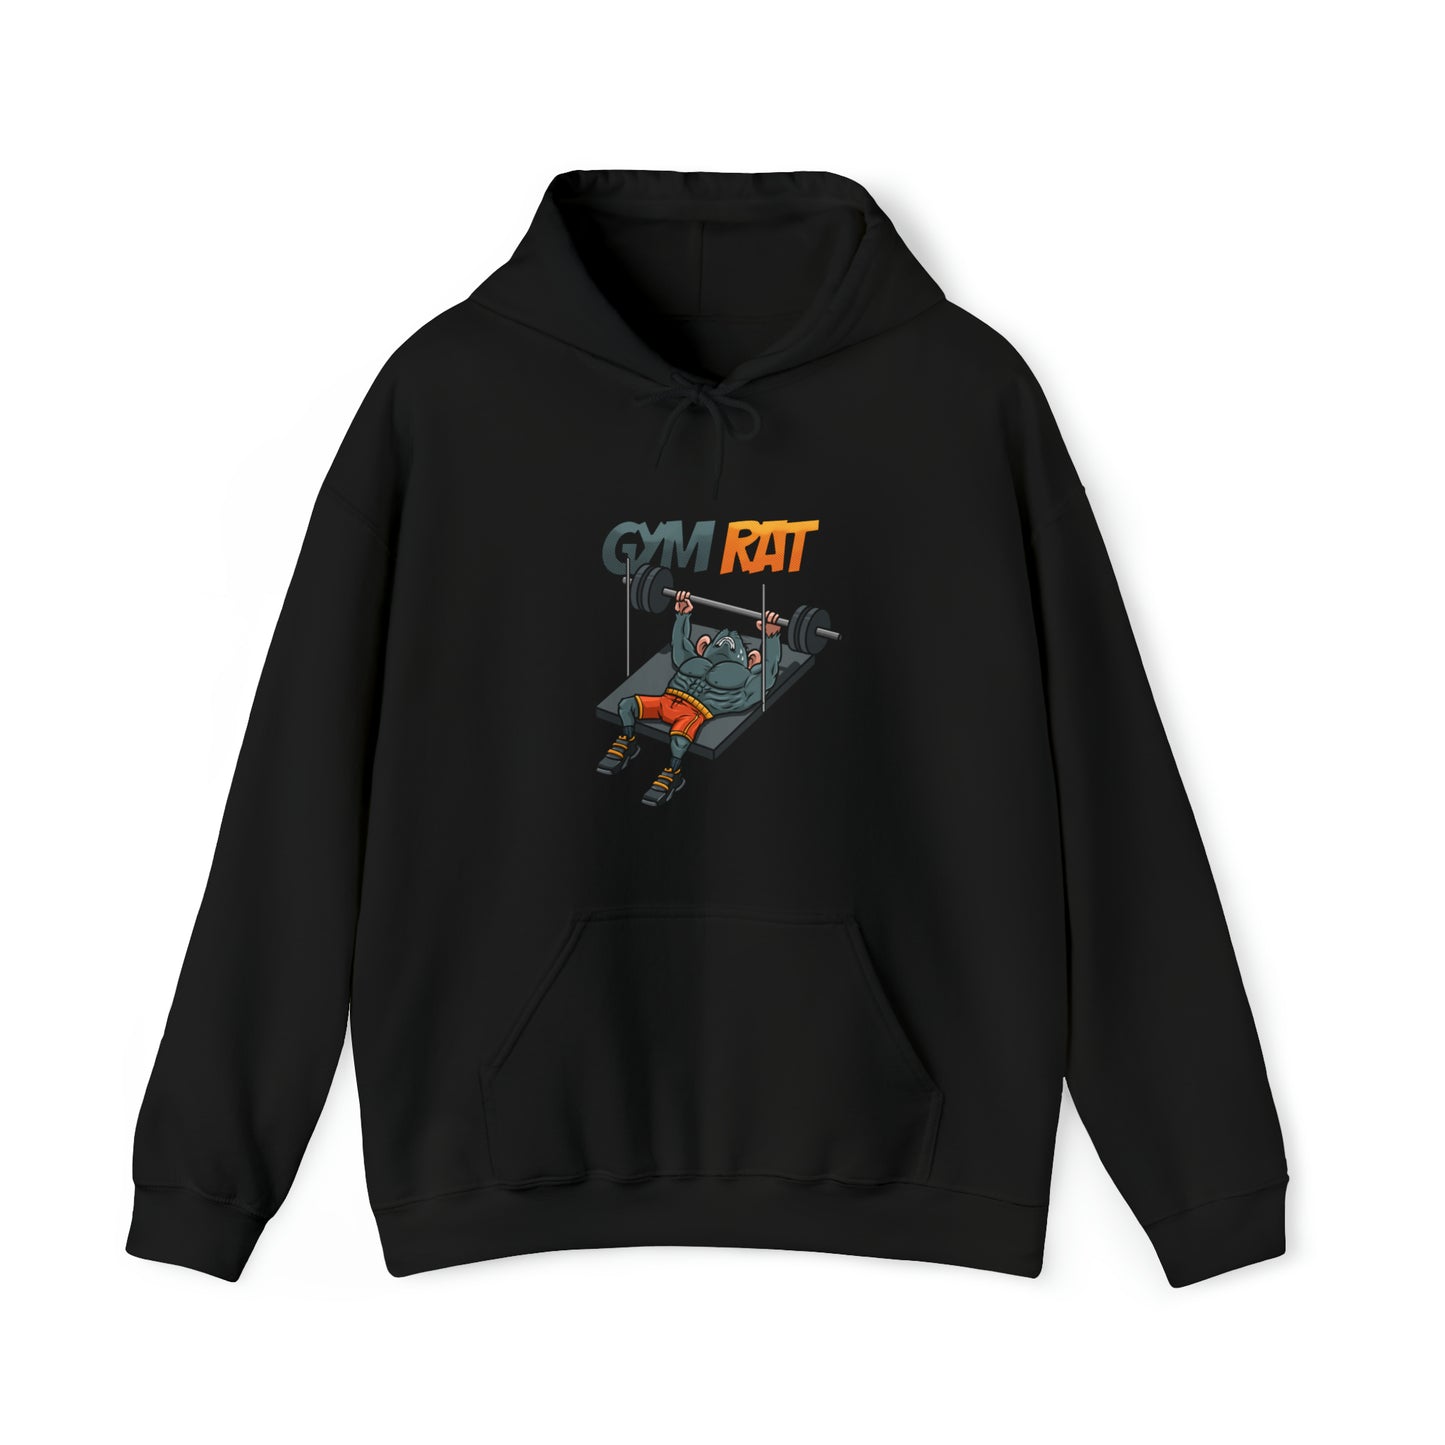 Custom Parody Hooded Sweatshirt, Gym Rat design